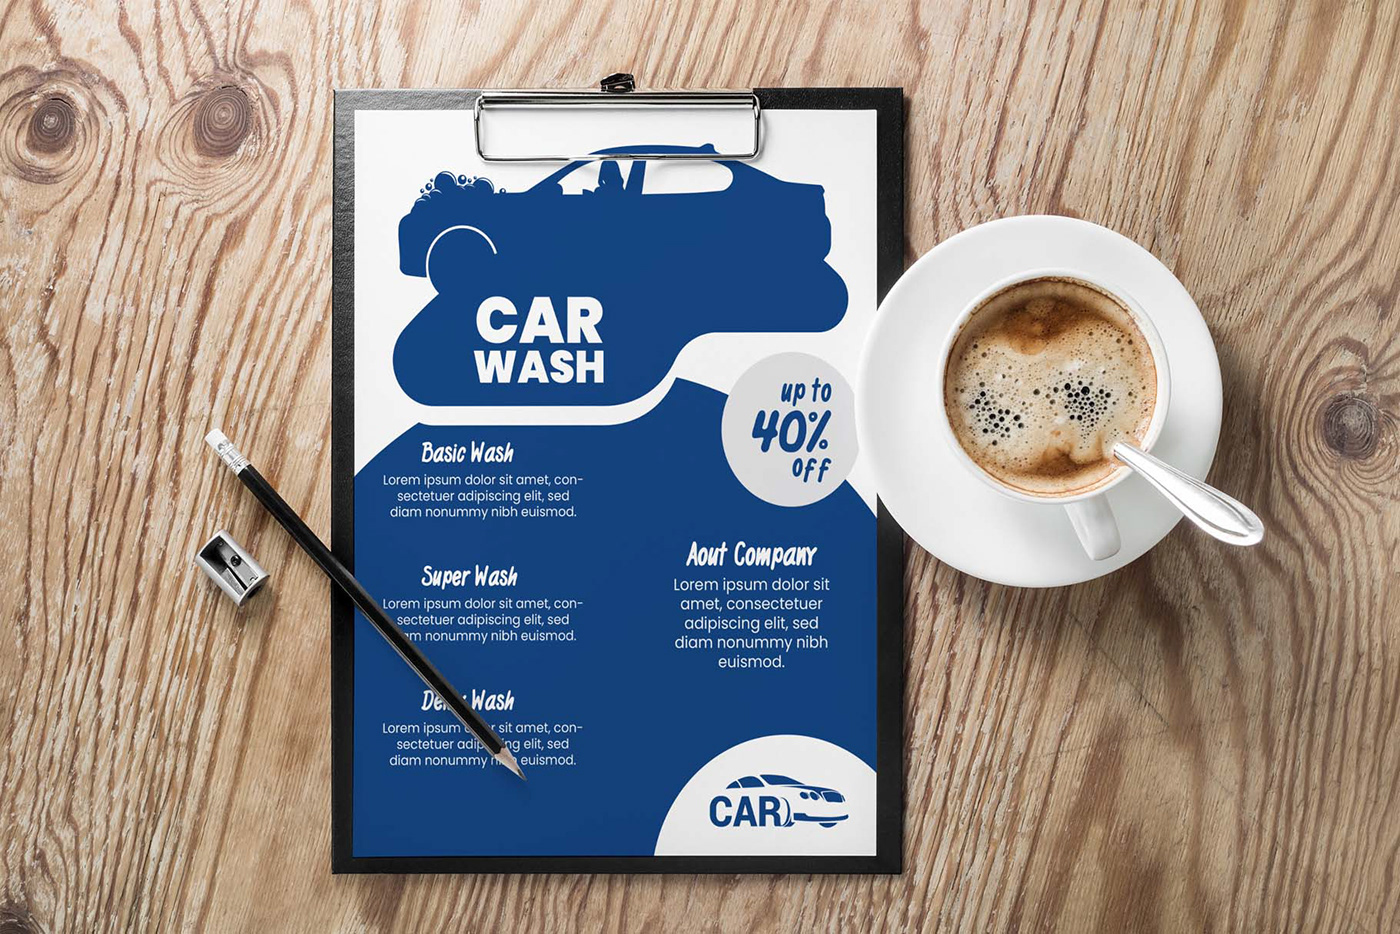 Car care car cleaning car polish car wash car wax care Carwash corporate design equipment